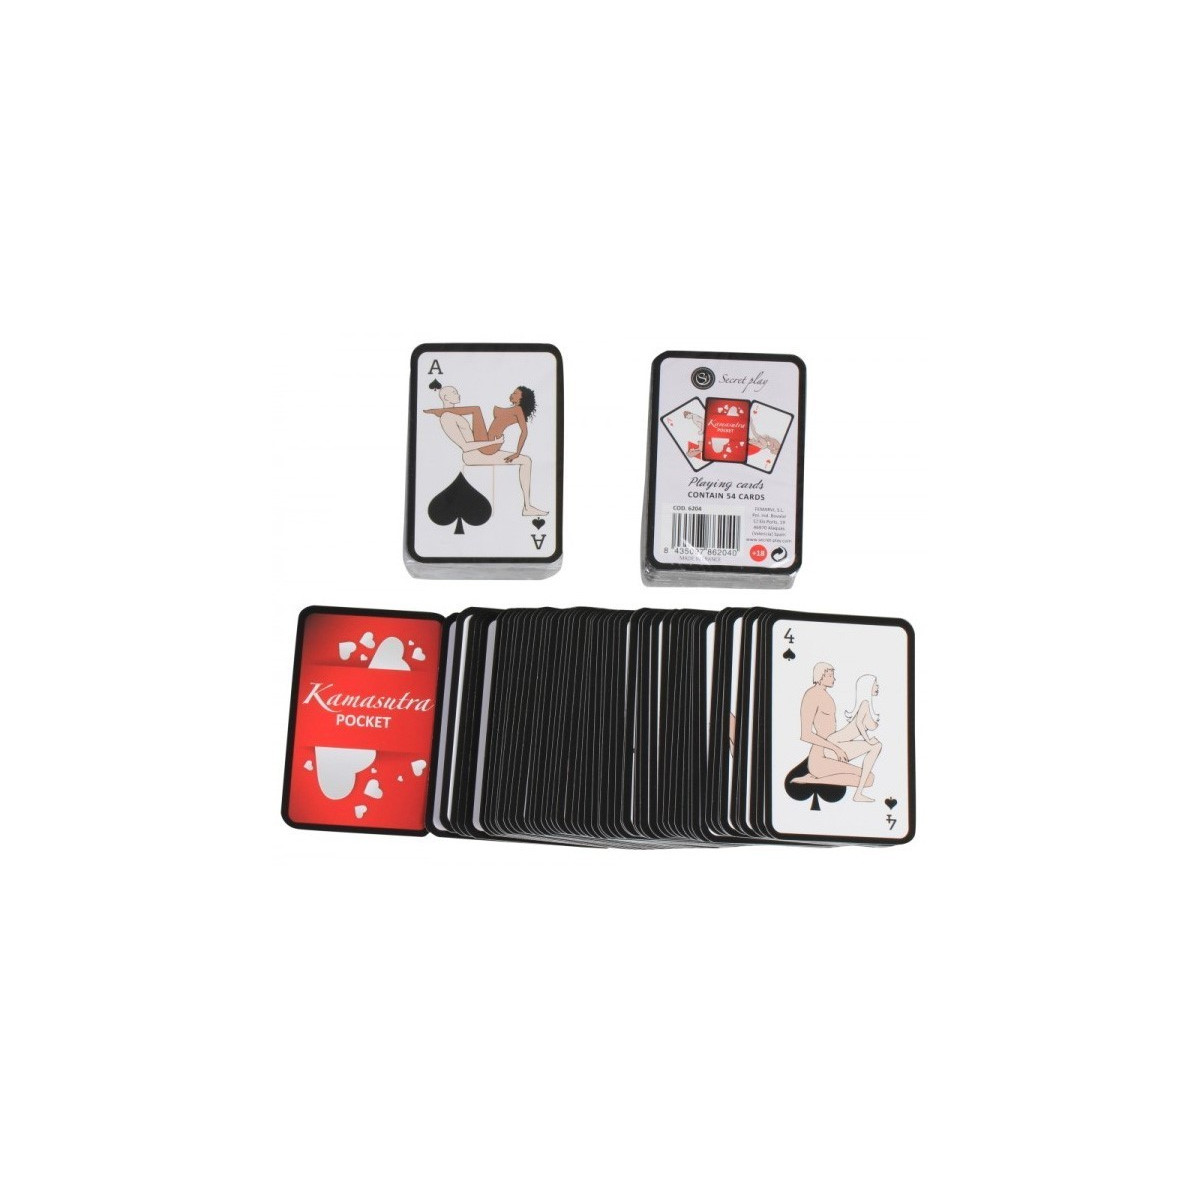 Mini juego de cartas erótico - 54 cartas